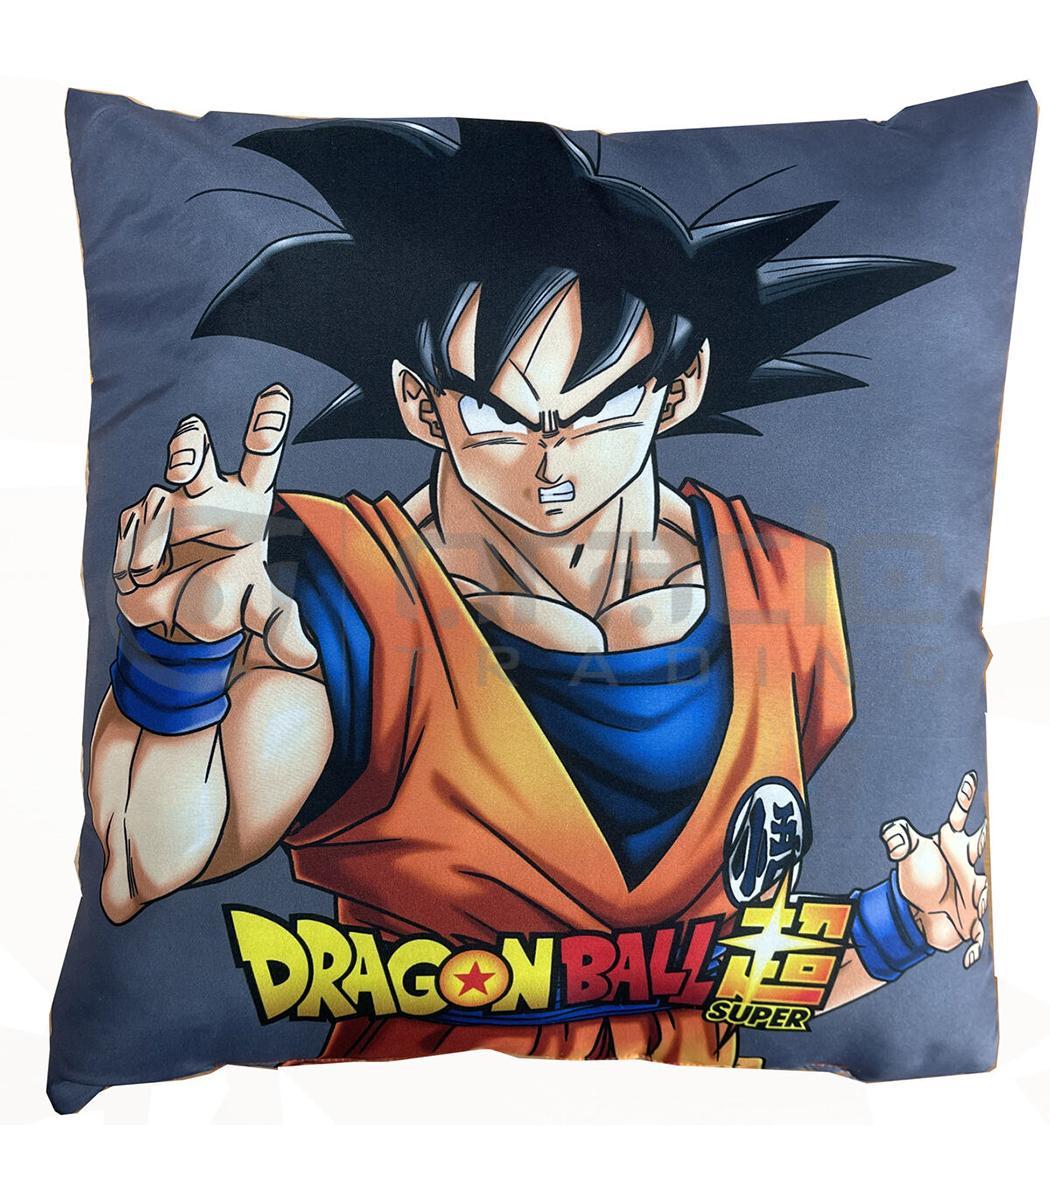 Dragon Ball Z Cushion - B